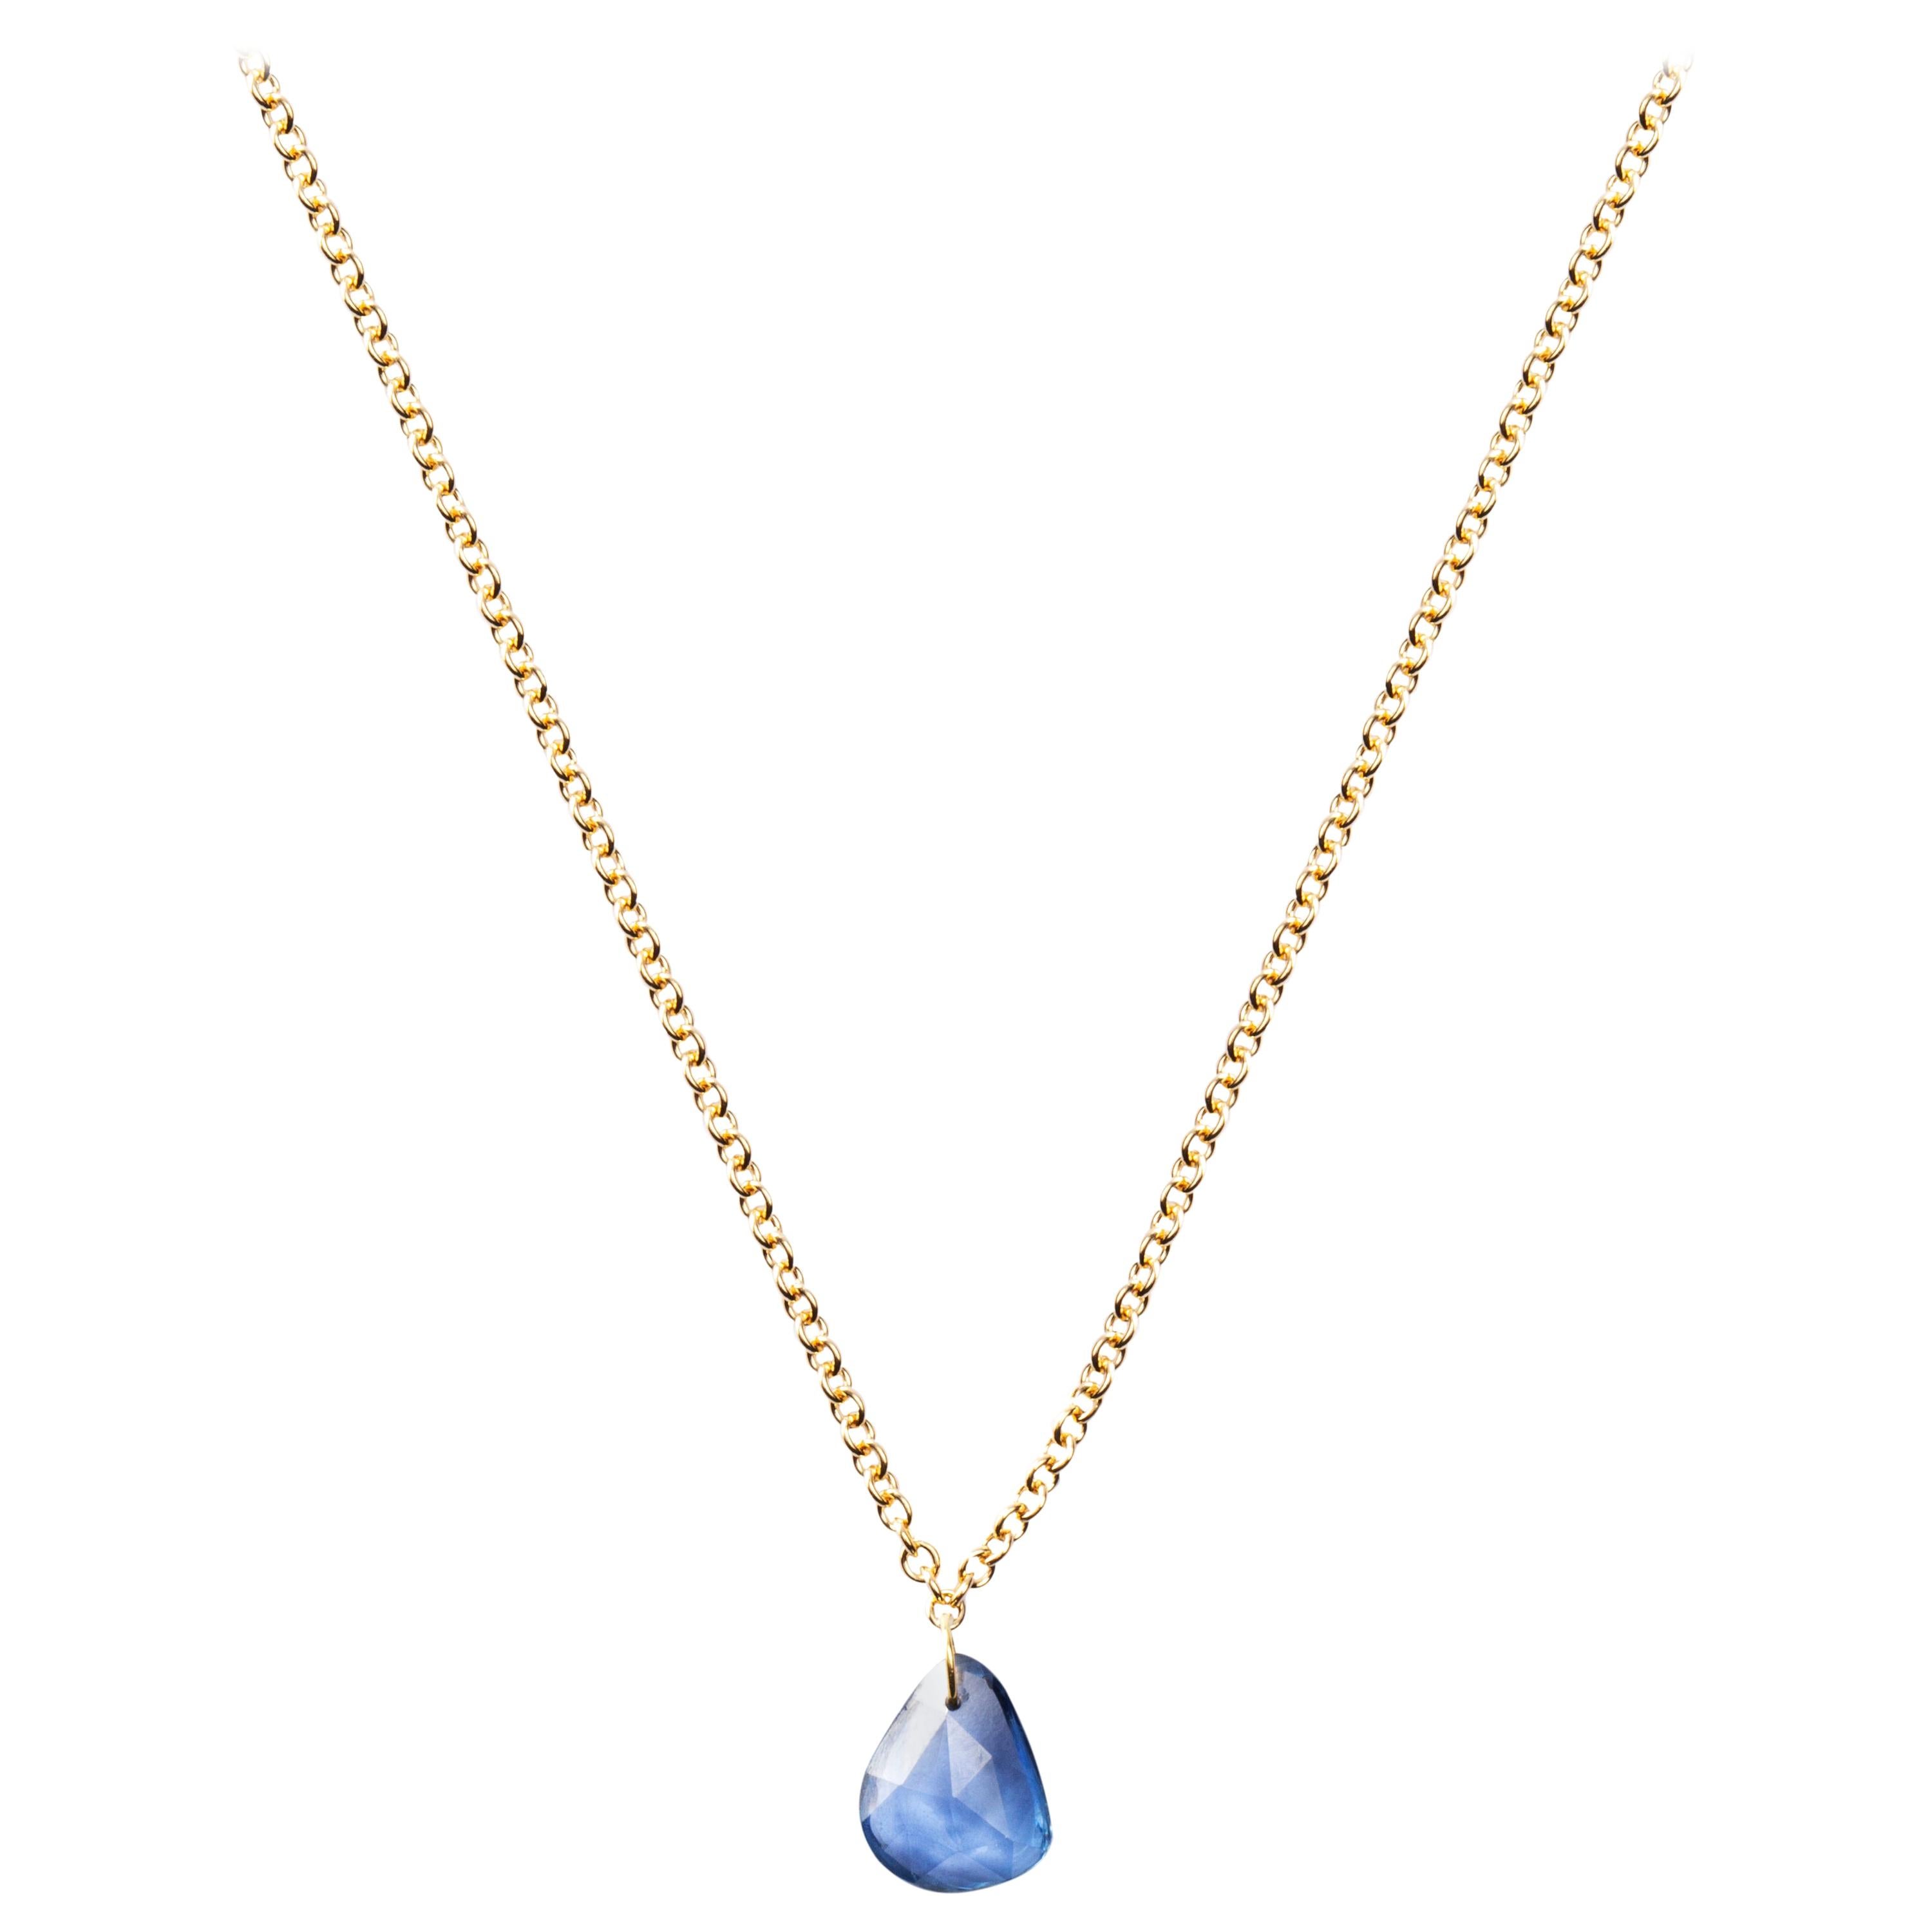 Jona Blue Sapphire 18 Karat Yellow Gold Pendant Necklace